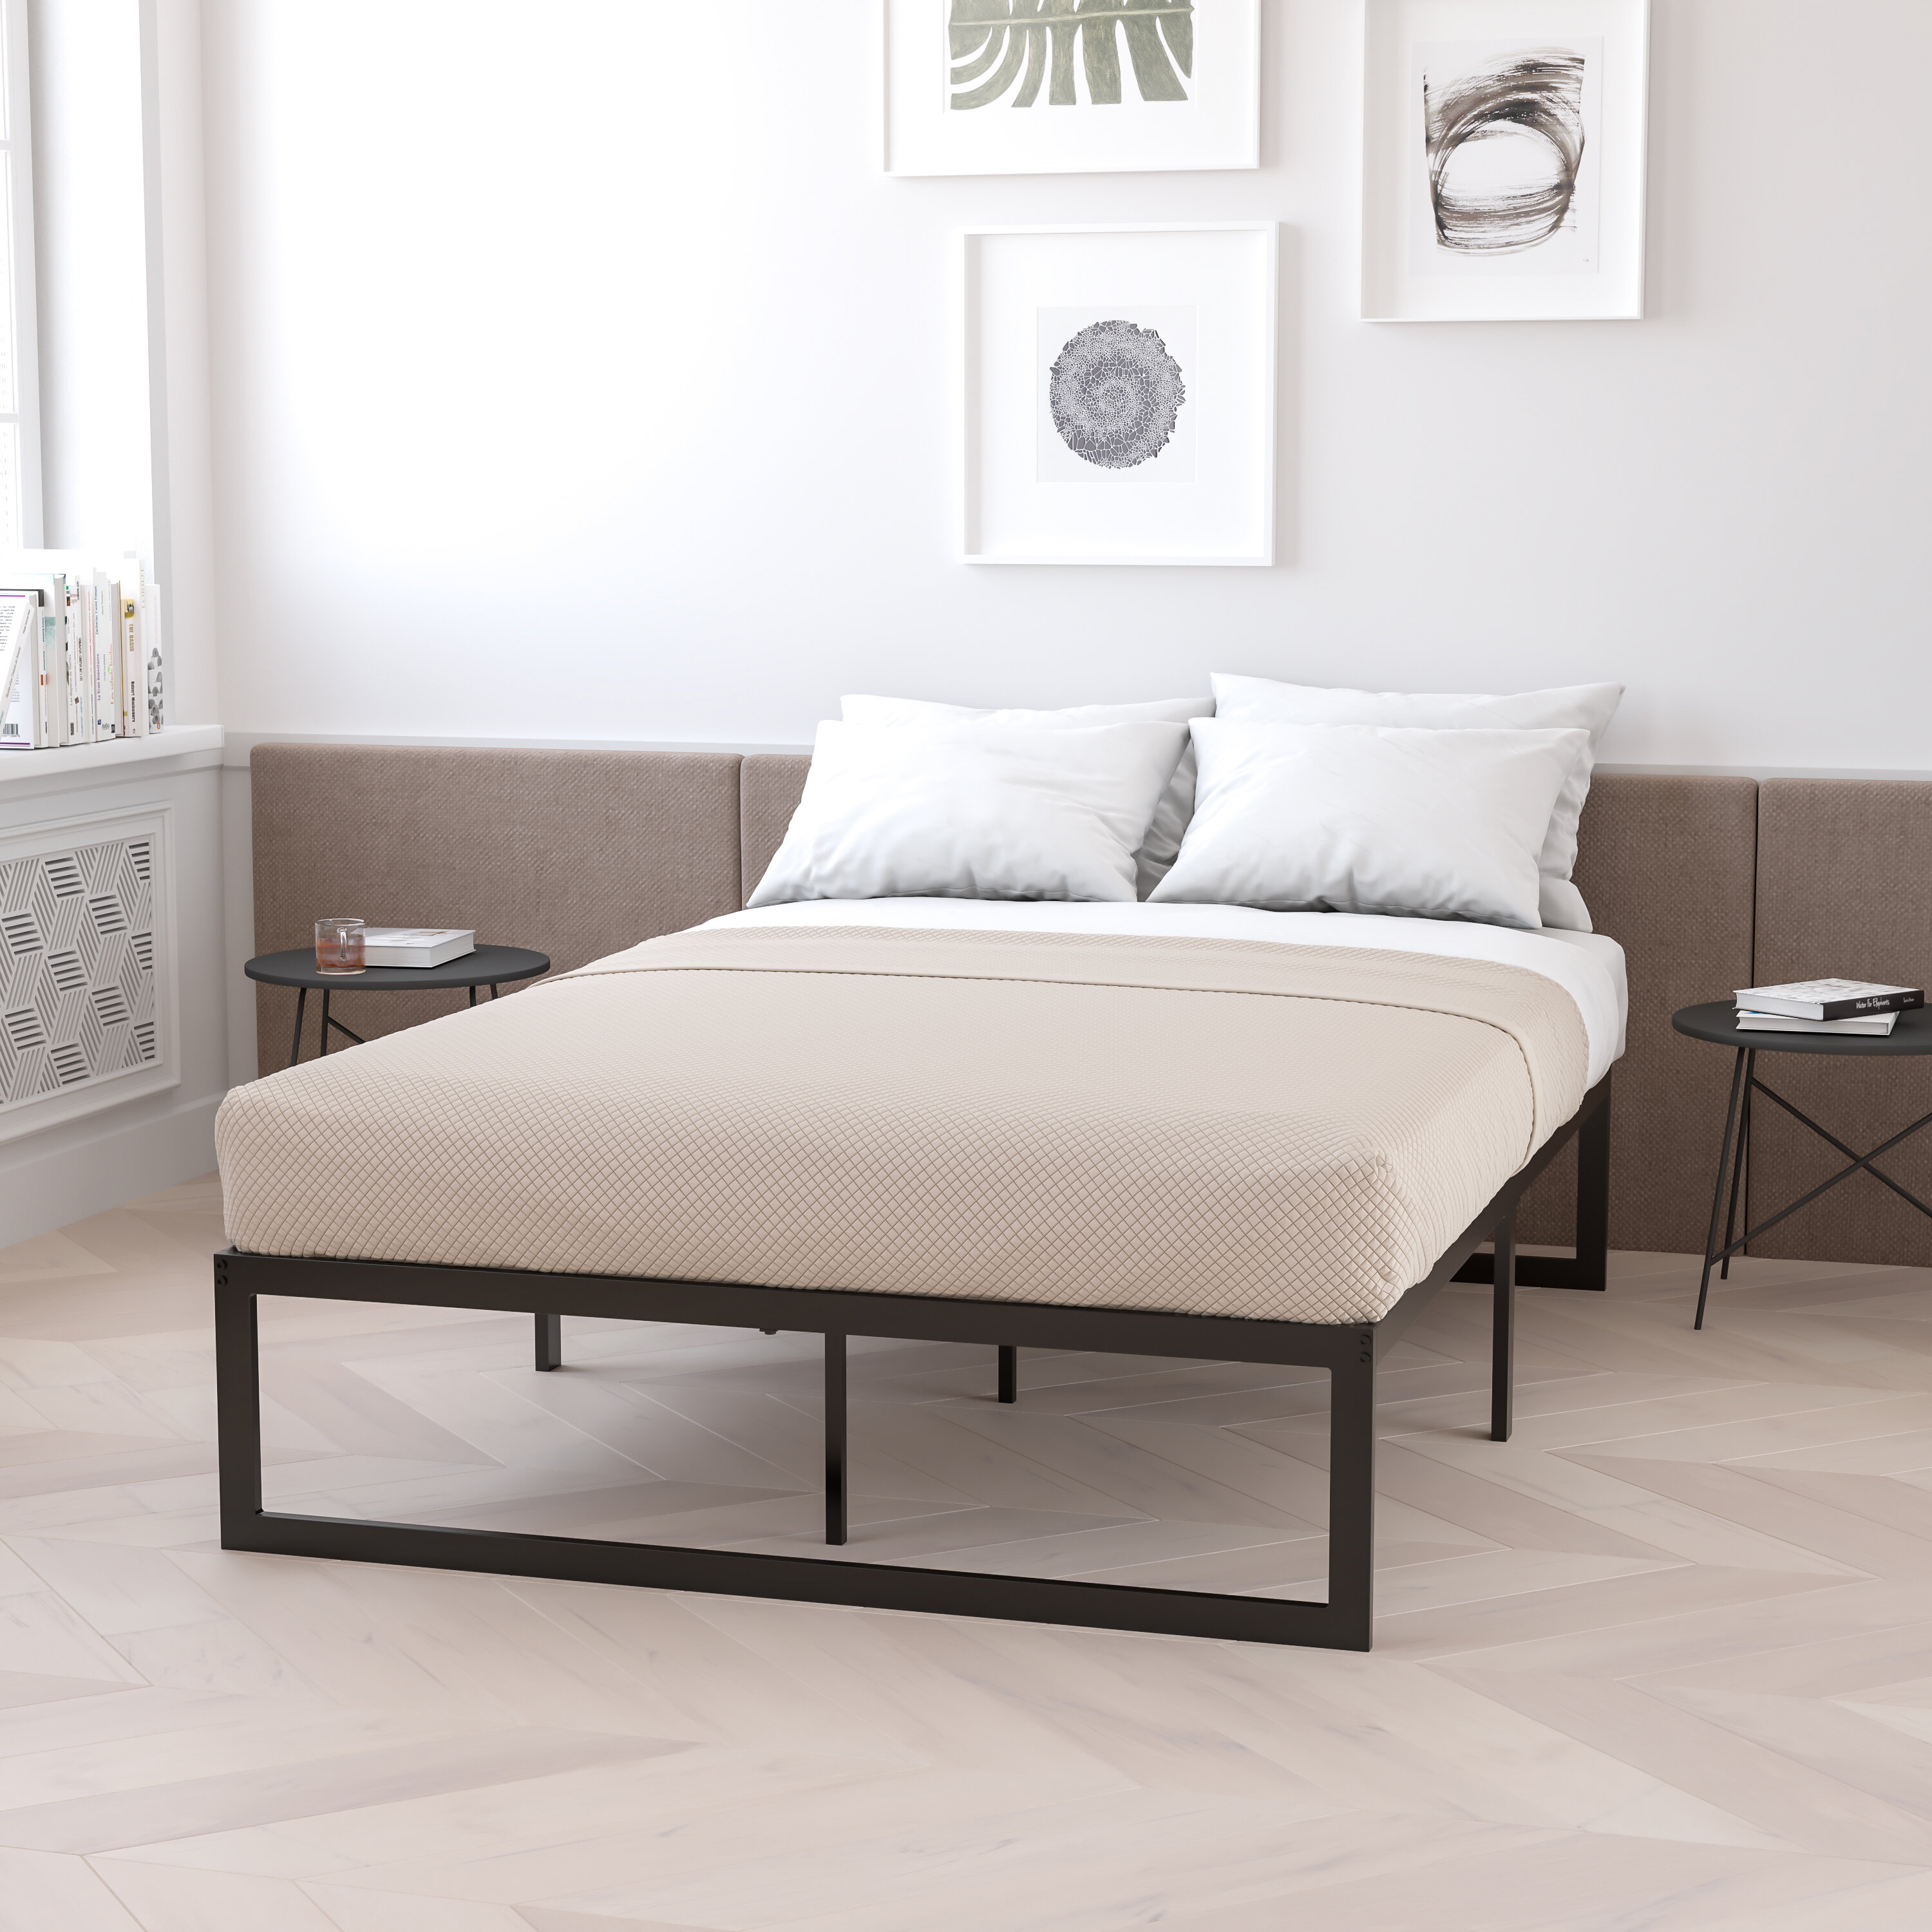   Basics Foldable, 14 Metal Platform Bed Frame, Twin  8-Inch Memory Foam Mattress - Soft Plush Feel, Twin : Home & Kitchen